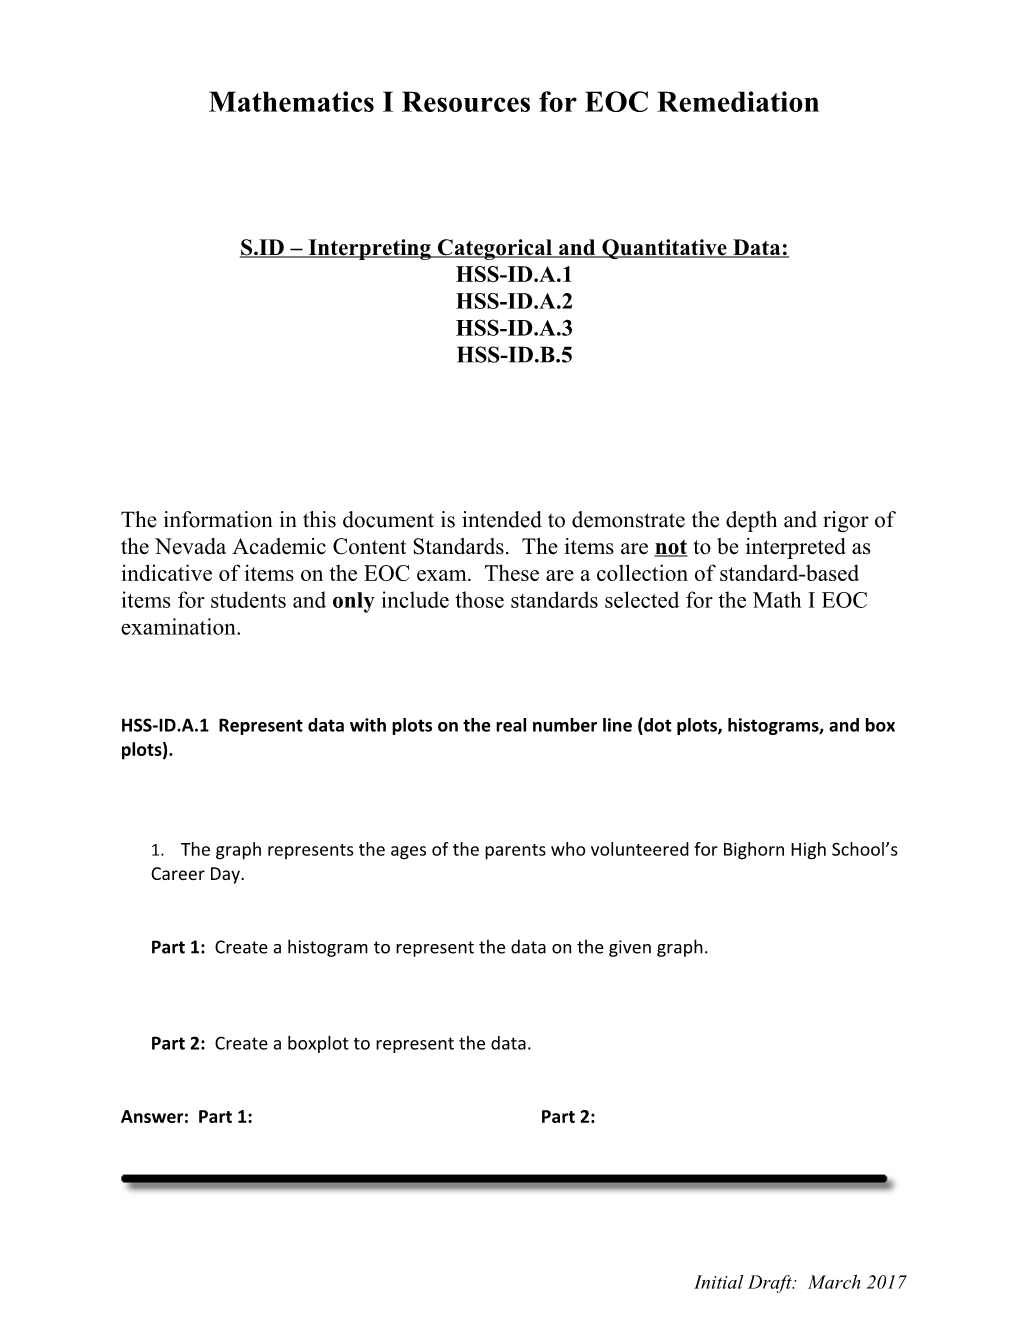 S.ID Interpreting Categorical and Quantitative Data